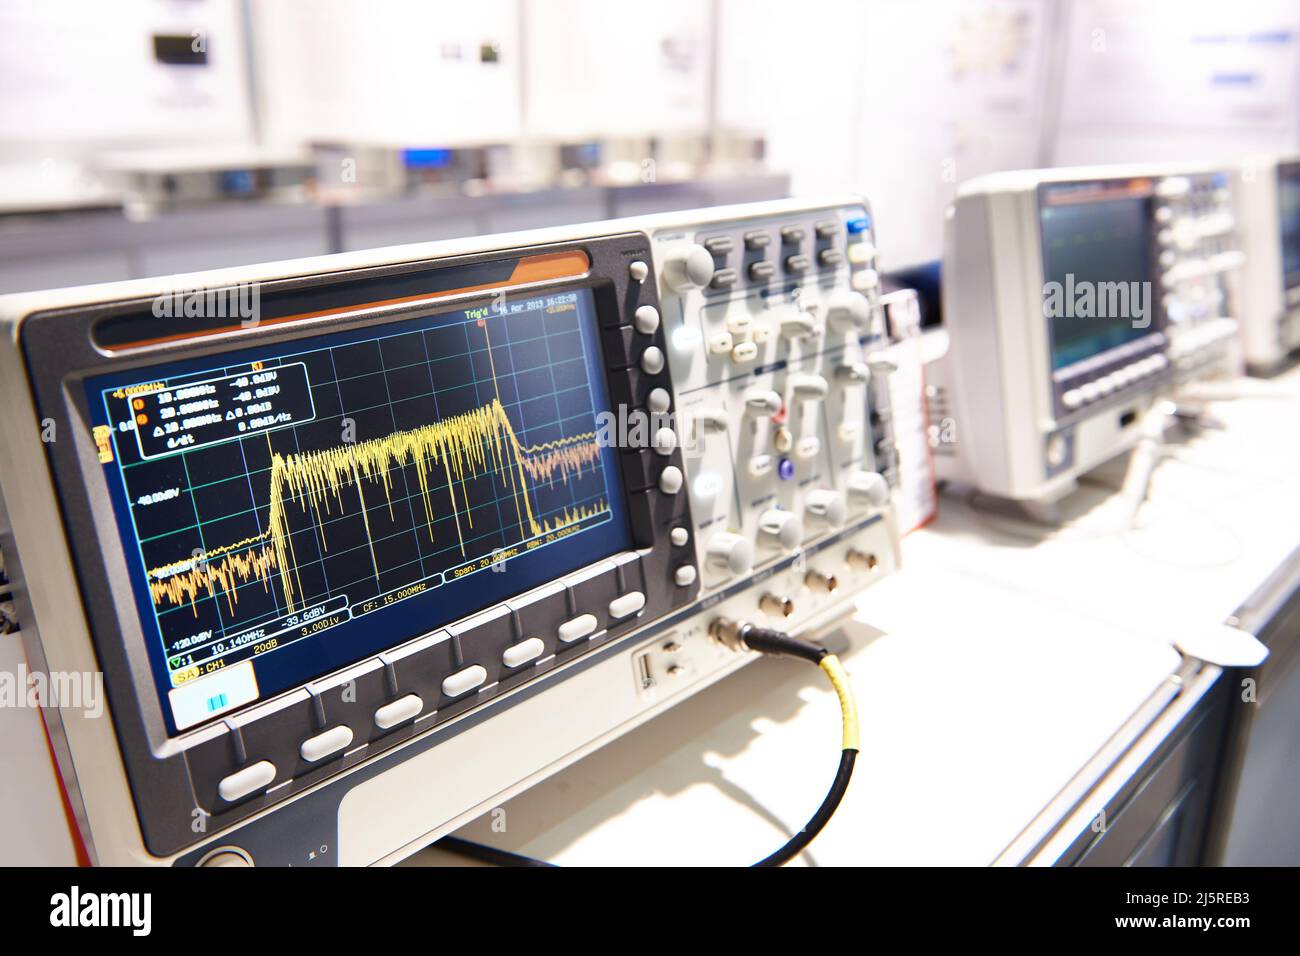 Oscilloscope spectrum analyzer in store exhibition Stock Photo